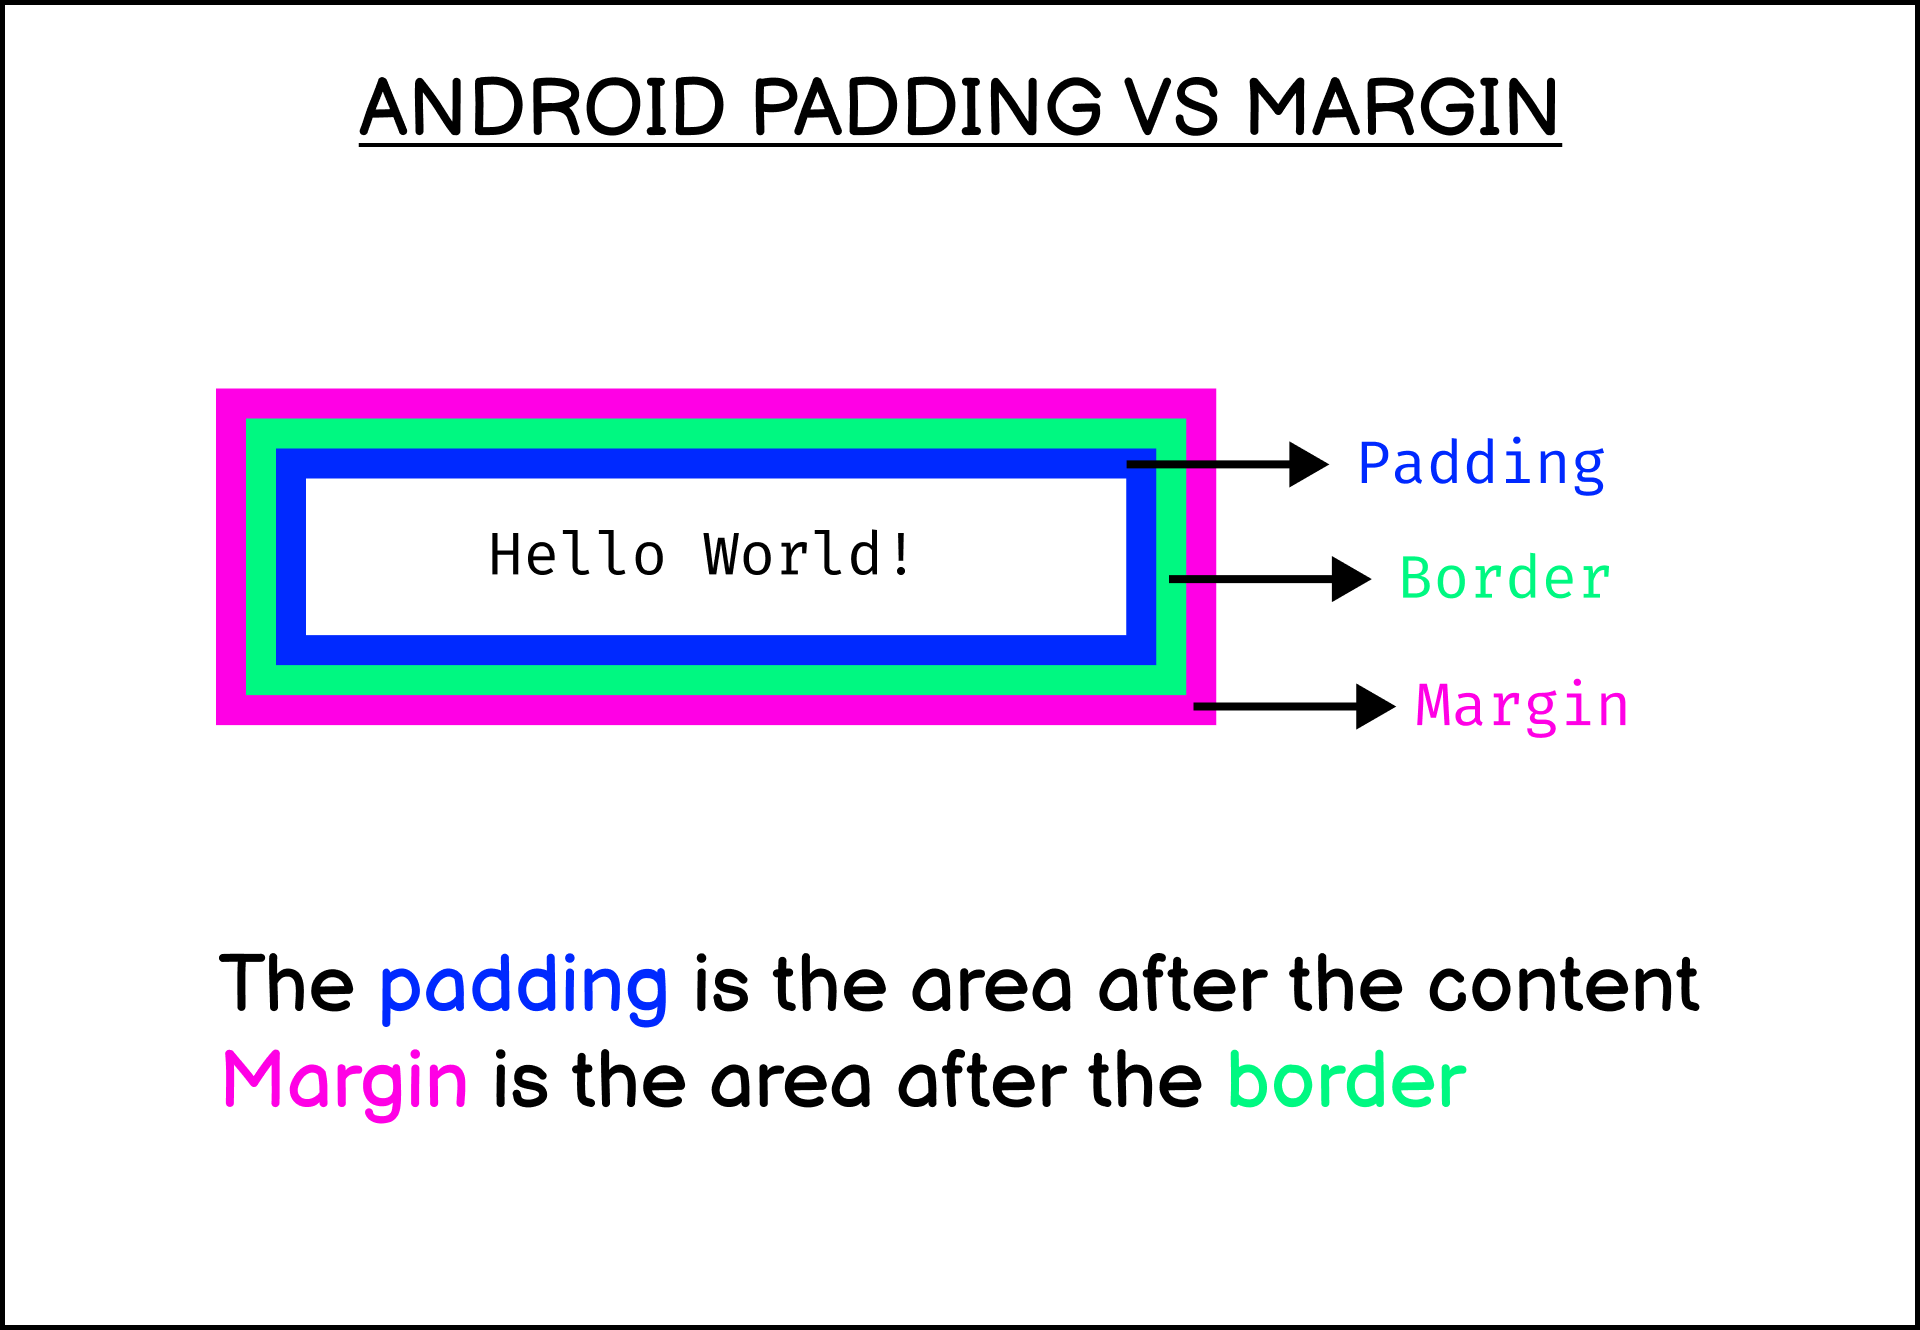 Android padding vs margin